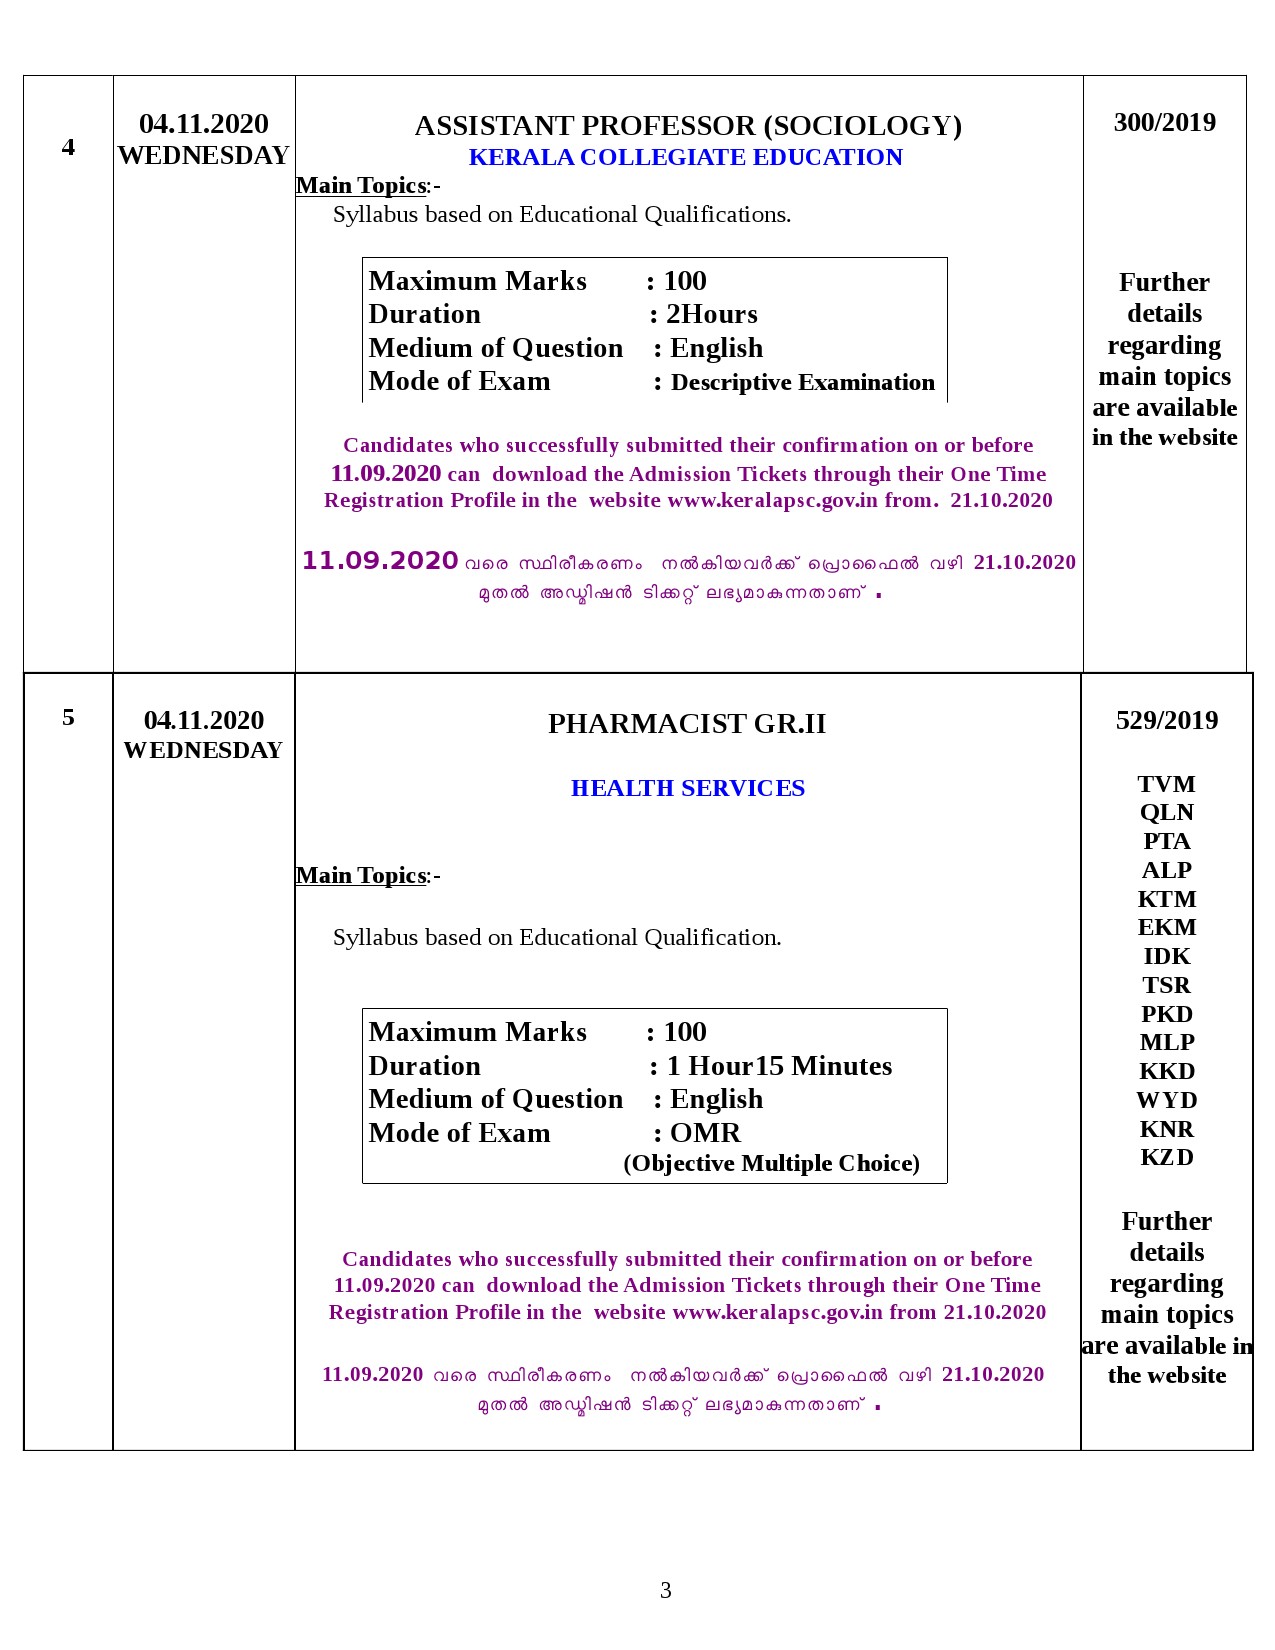 Kerala PSC Final Exam Schedule for November 2020 - Notification Image 3